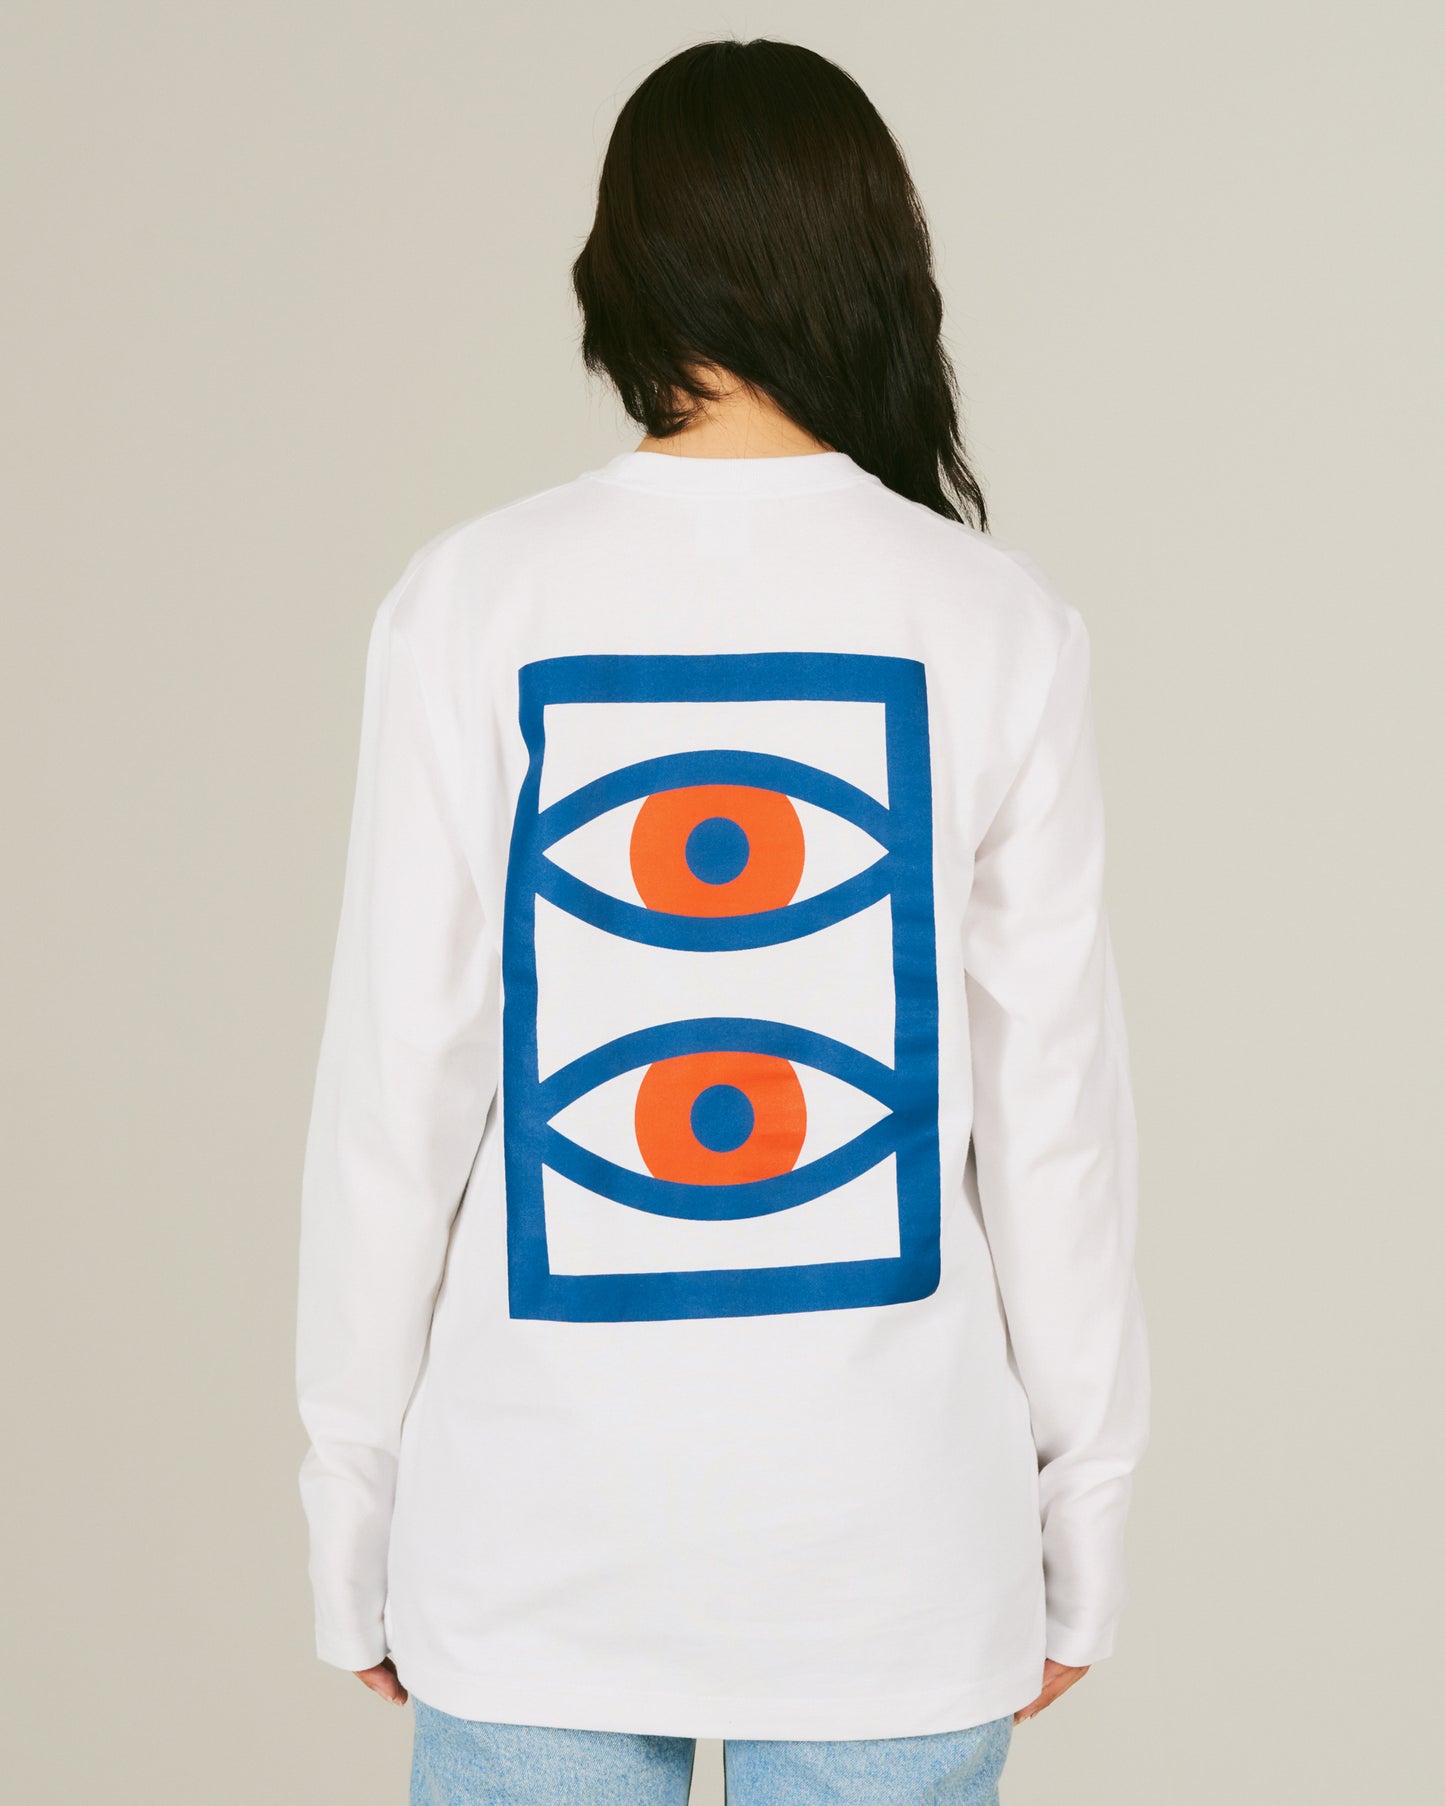 目 / Eye LongT-Shirt BACK PRINT